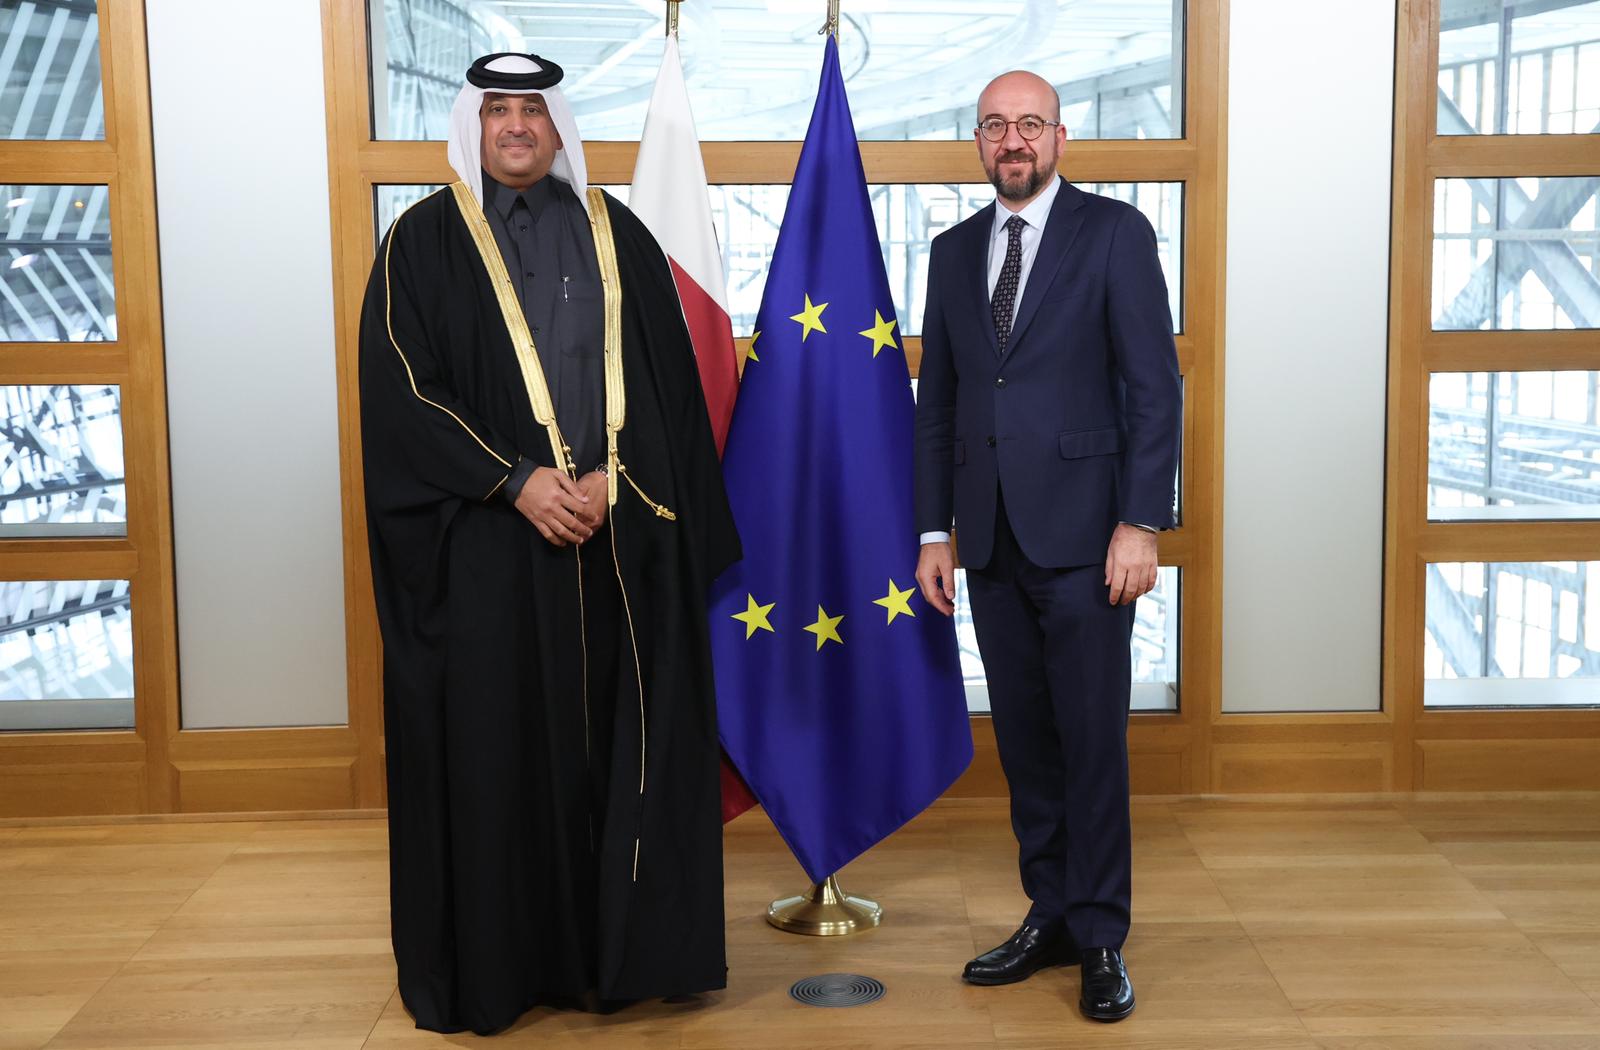 President of the EU Council Receives Credentials of Qatar's Ambassador